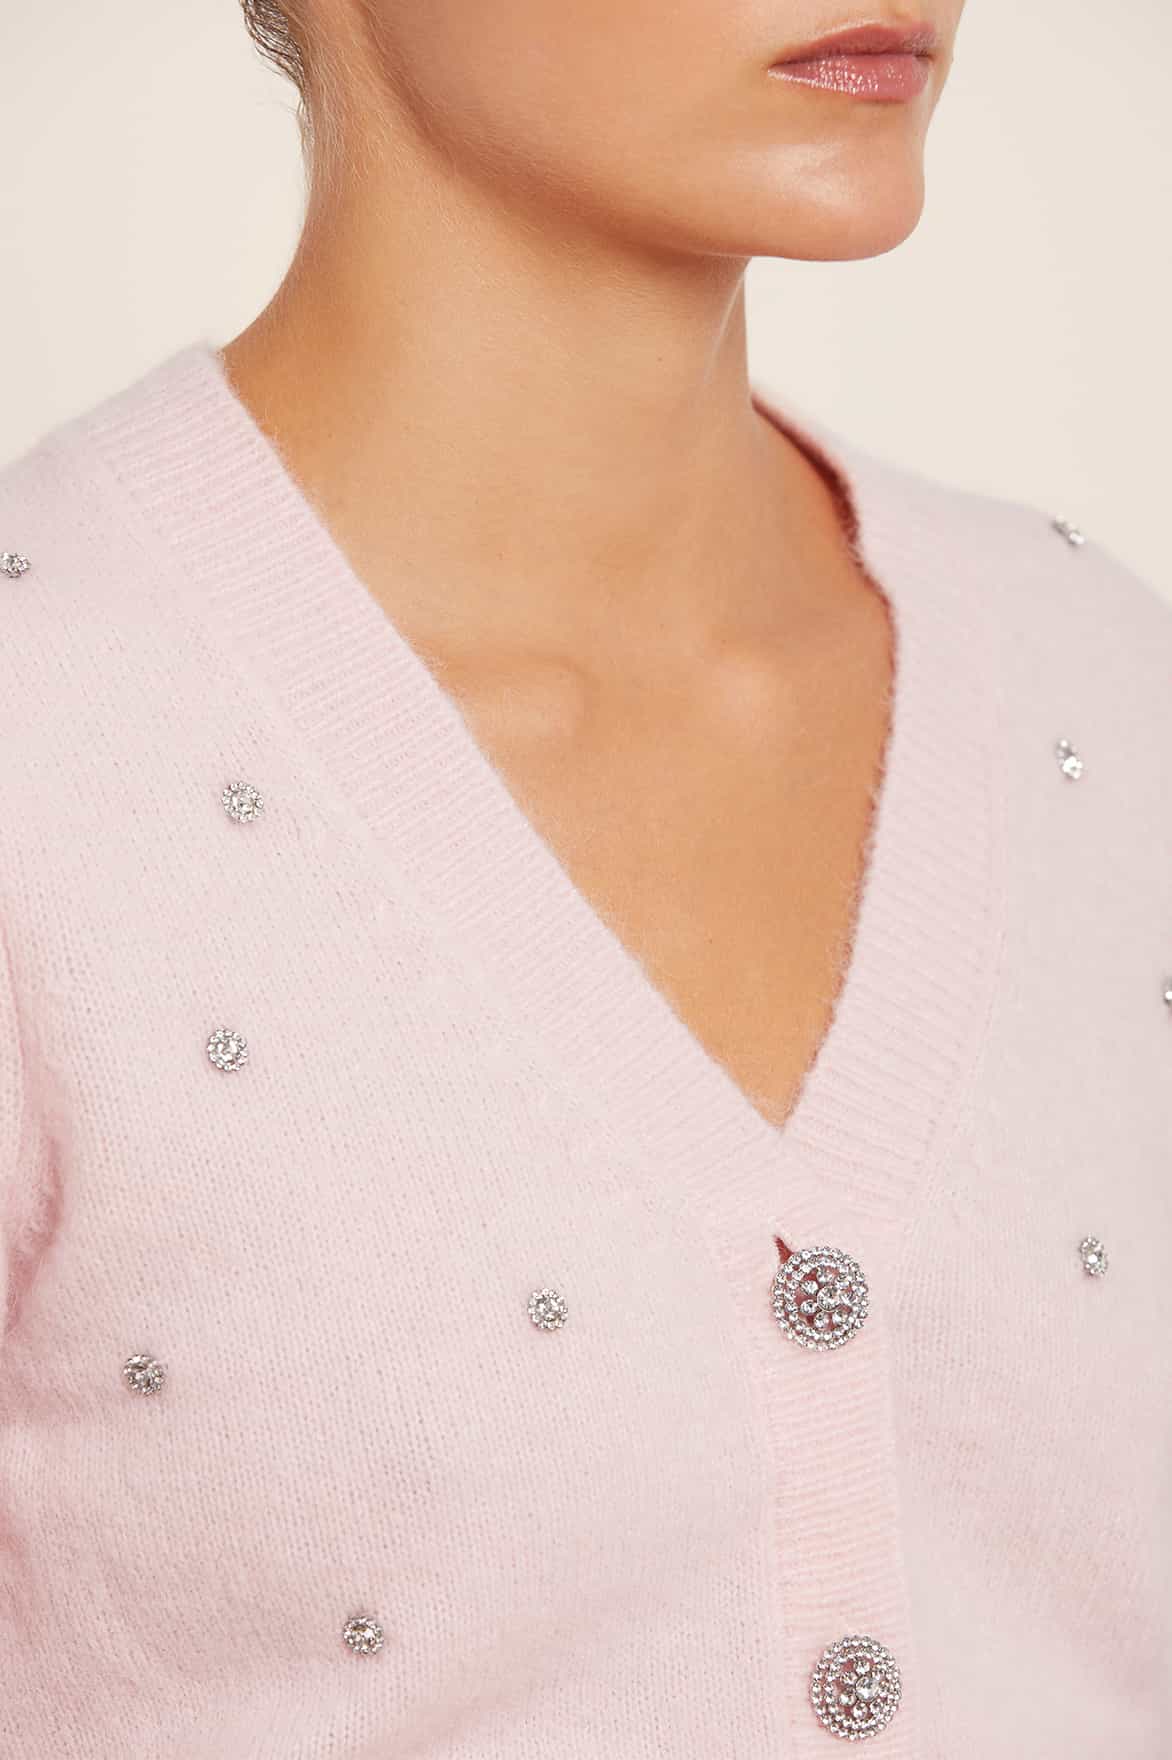 Embellished Crop Cardigan – Pink